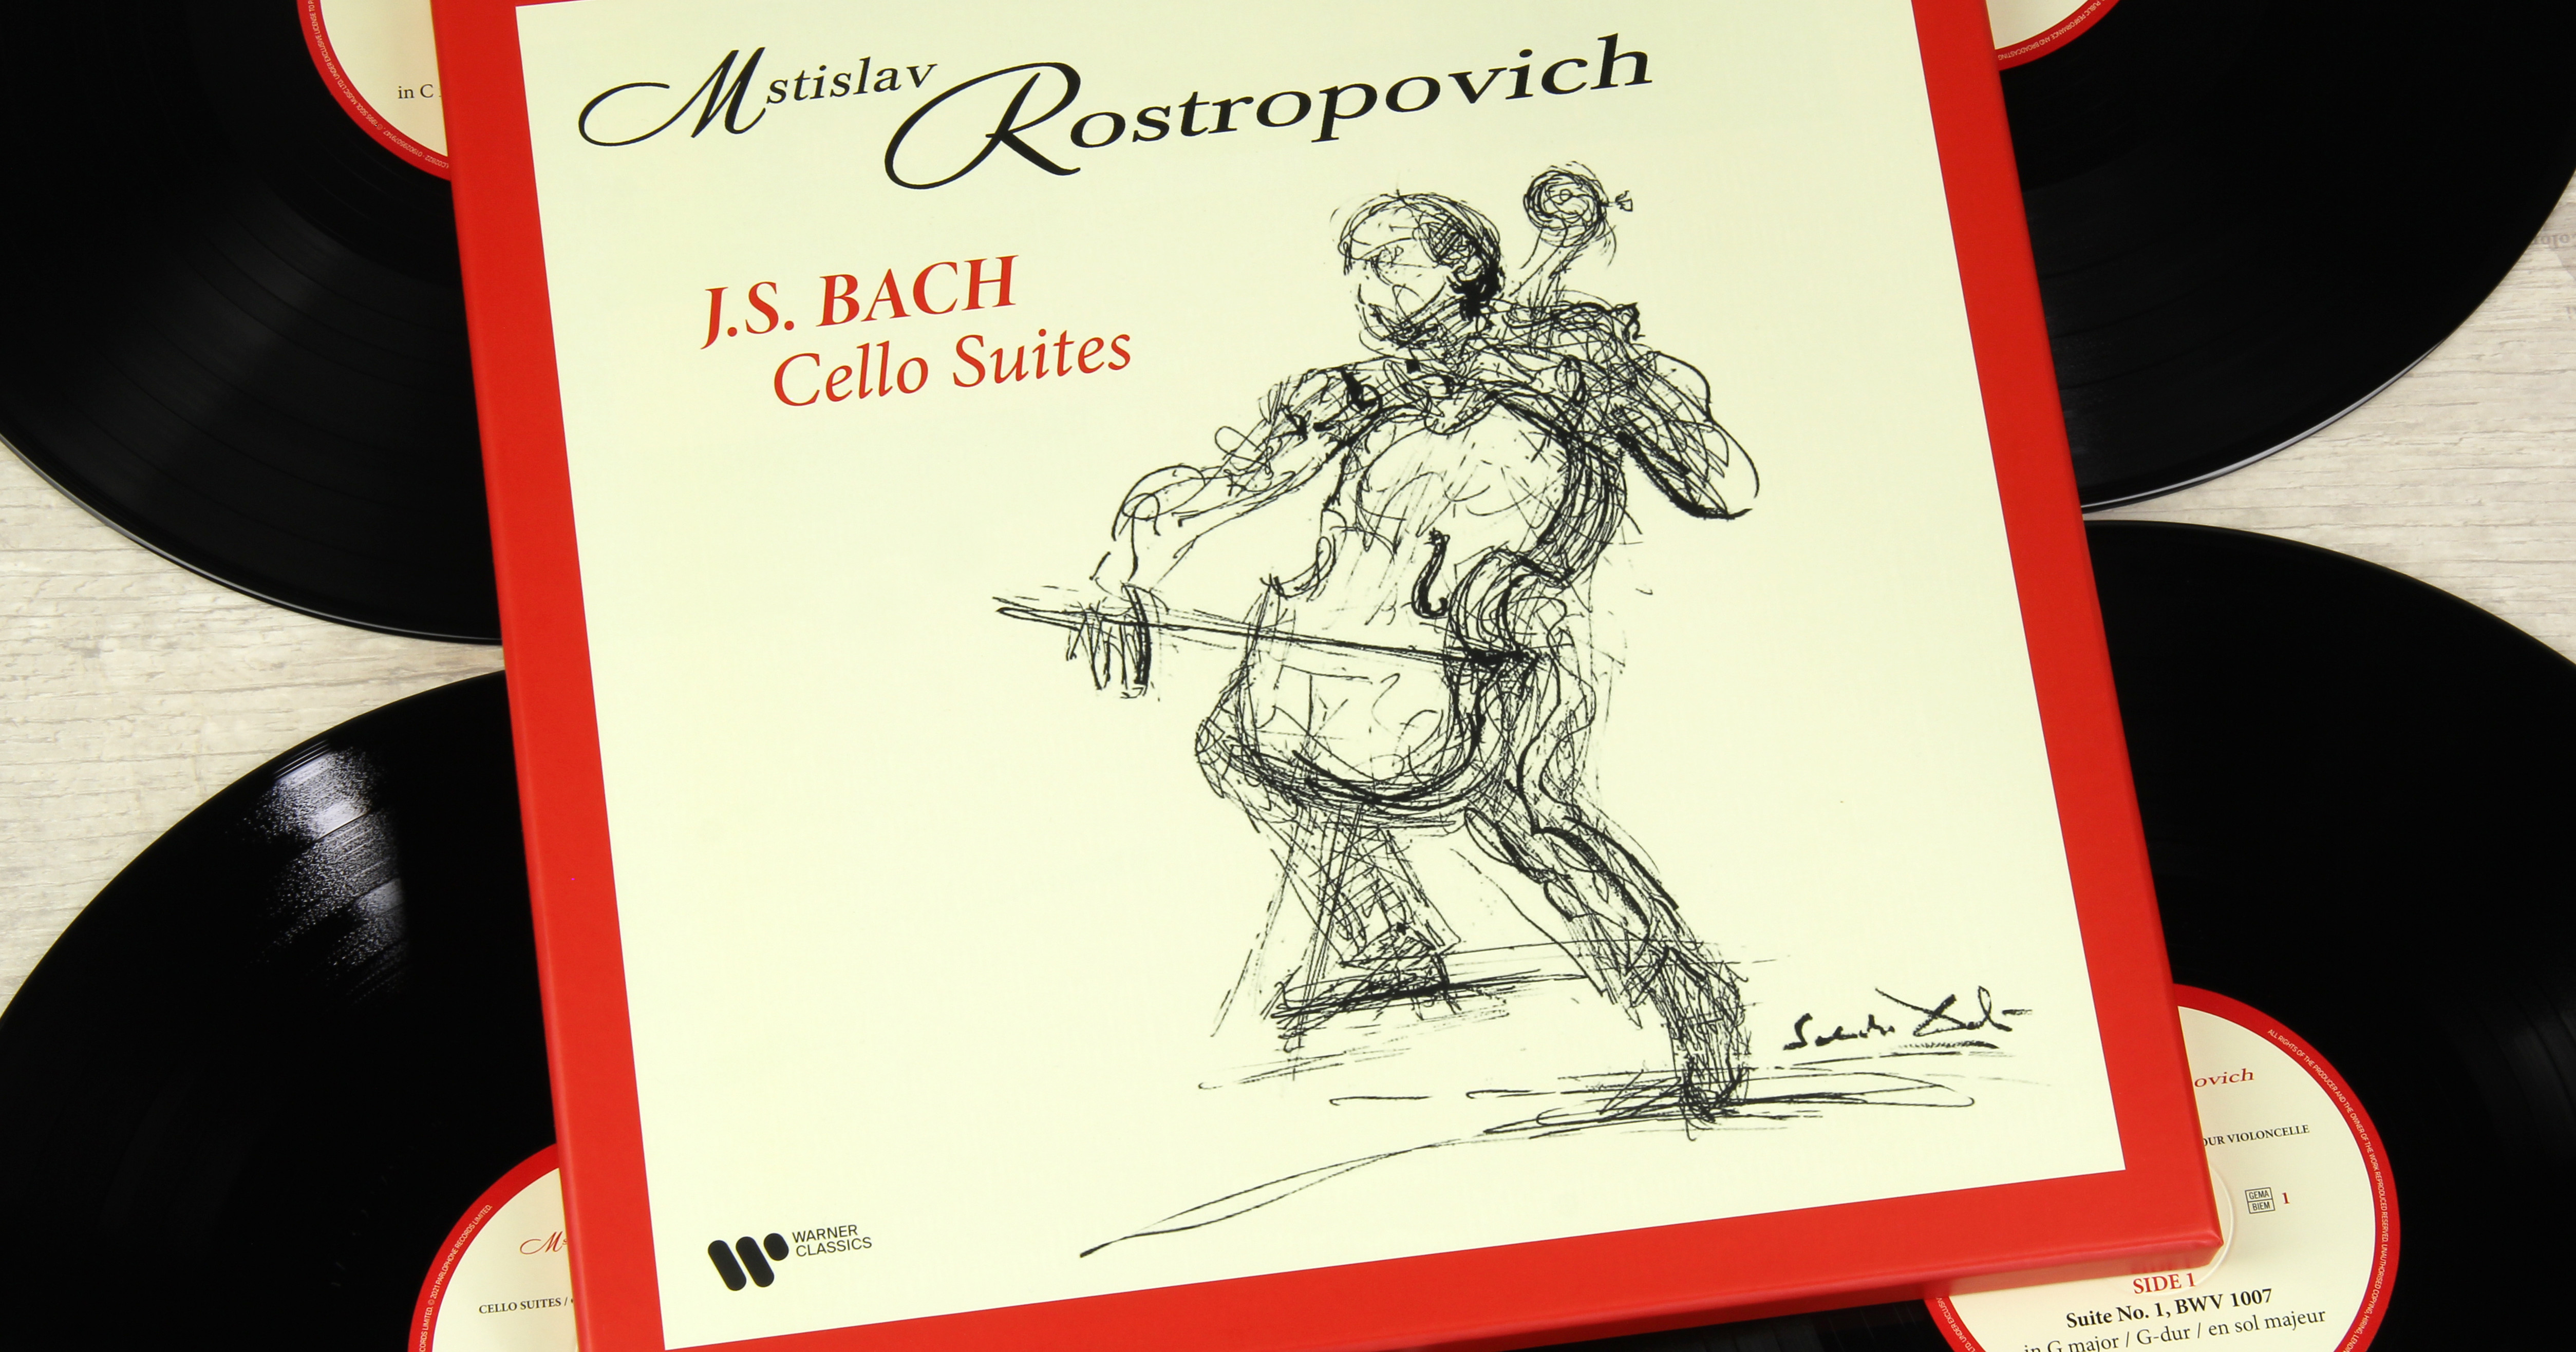 Виниловая пластинка MSTISLAV ROSTROPOVICH - J.S. BACH: CELLO SUITES